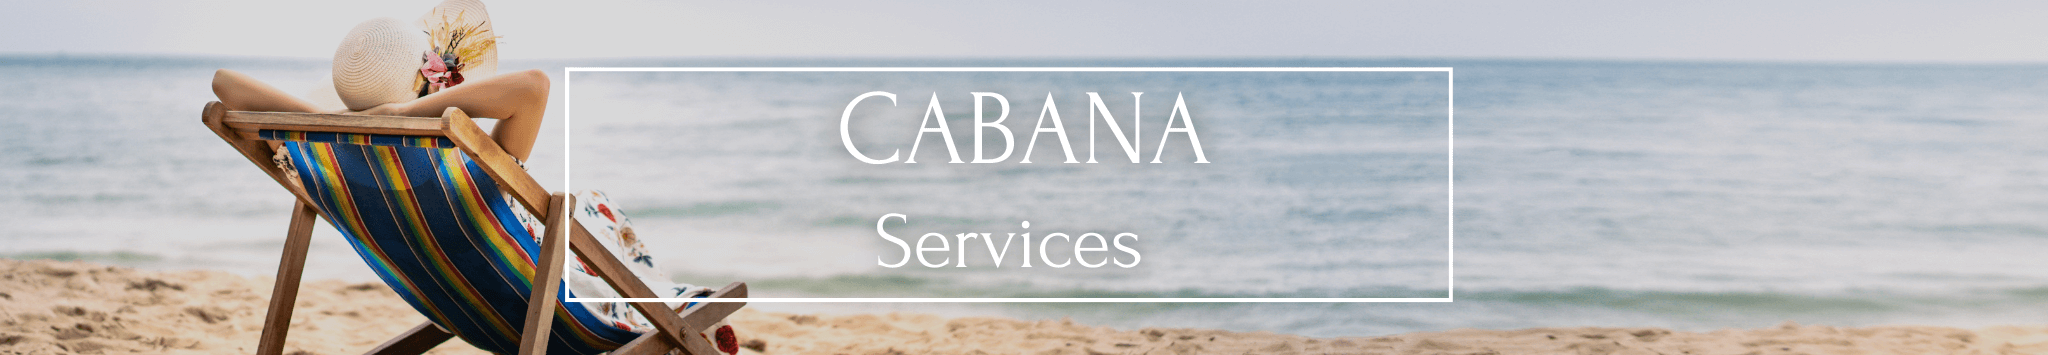 cabana services